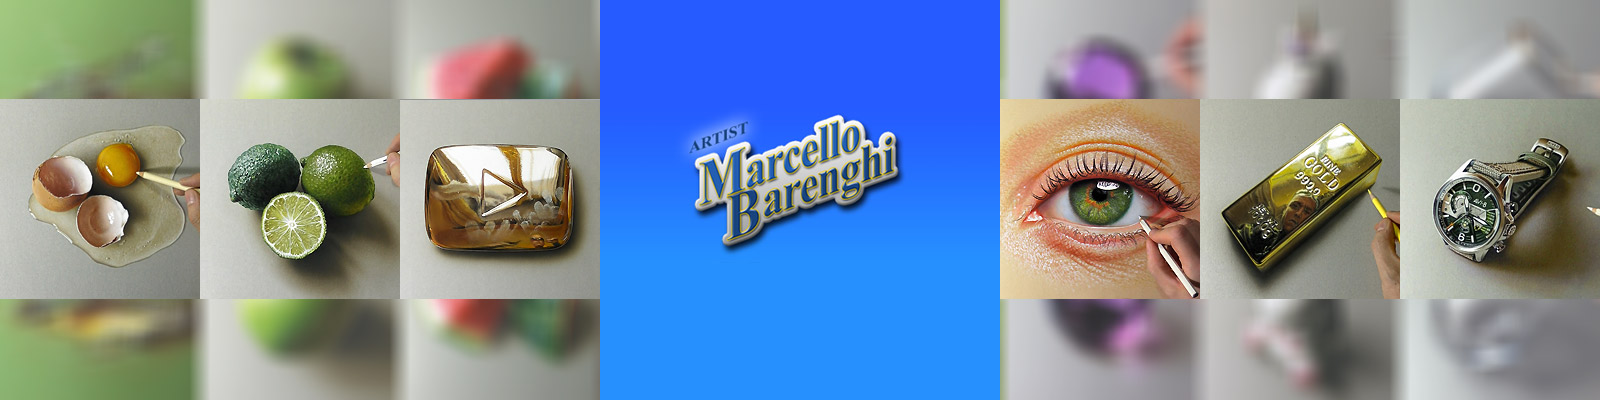 MarcelloBarenghi banner